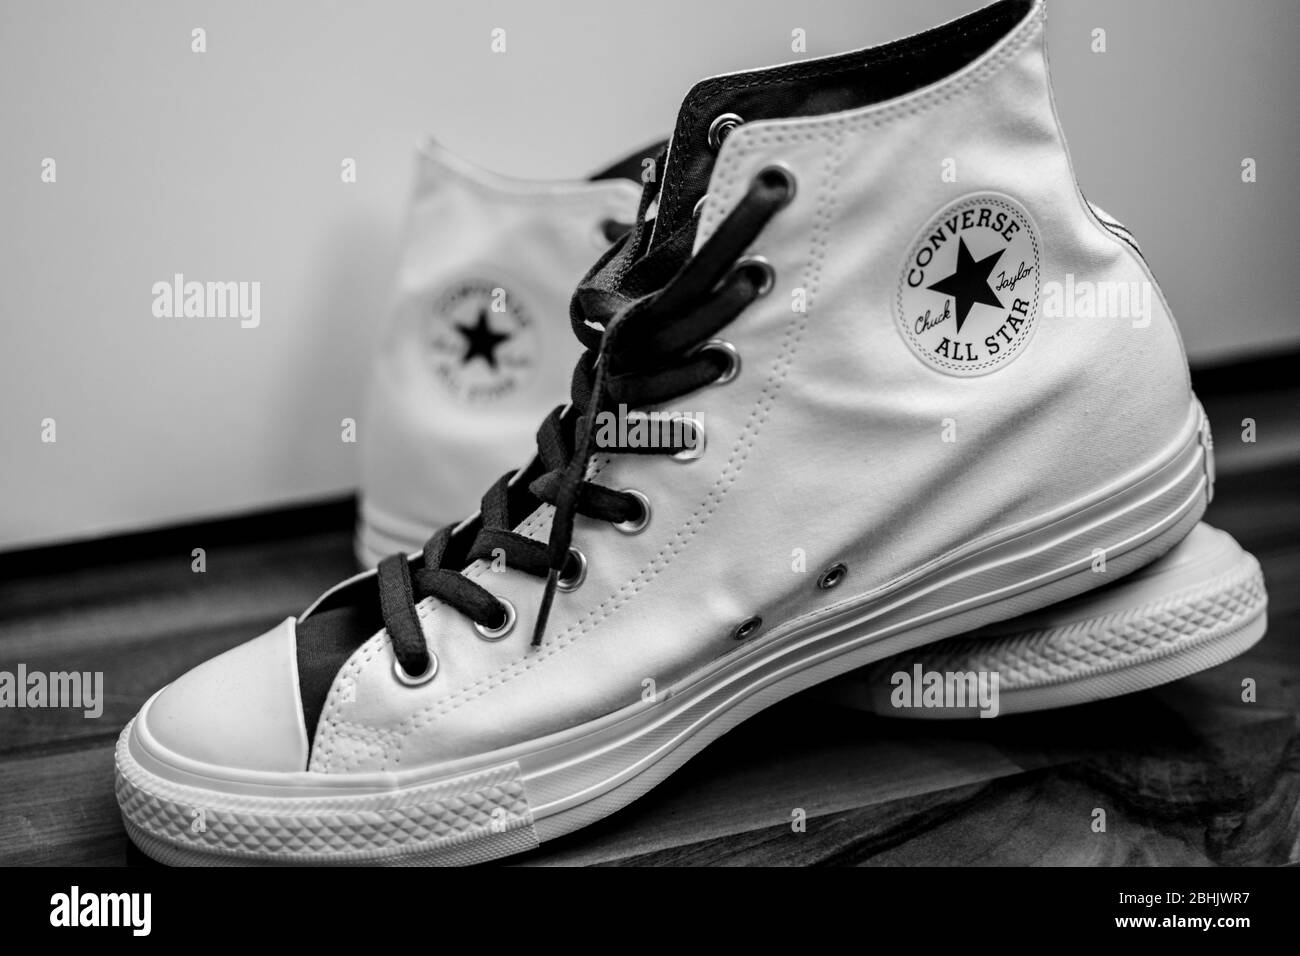 Zapatillas e imágenes de alta resolución - Alamy